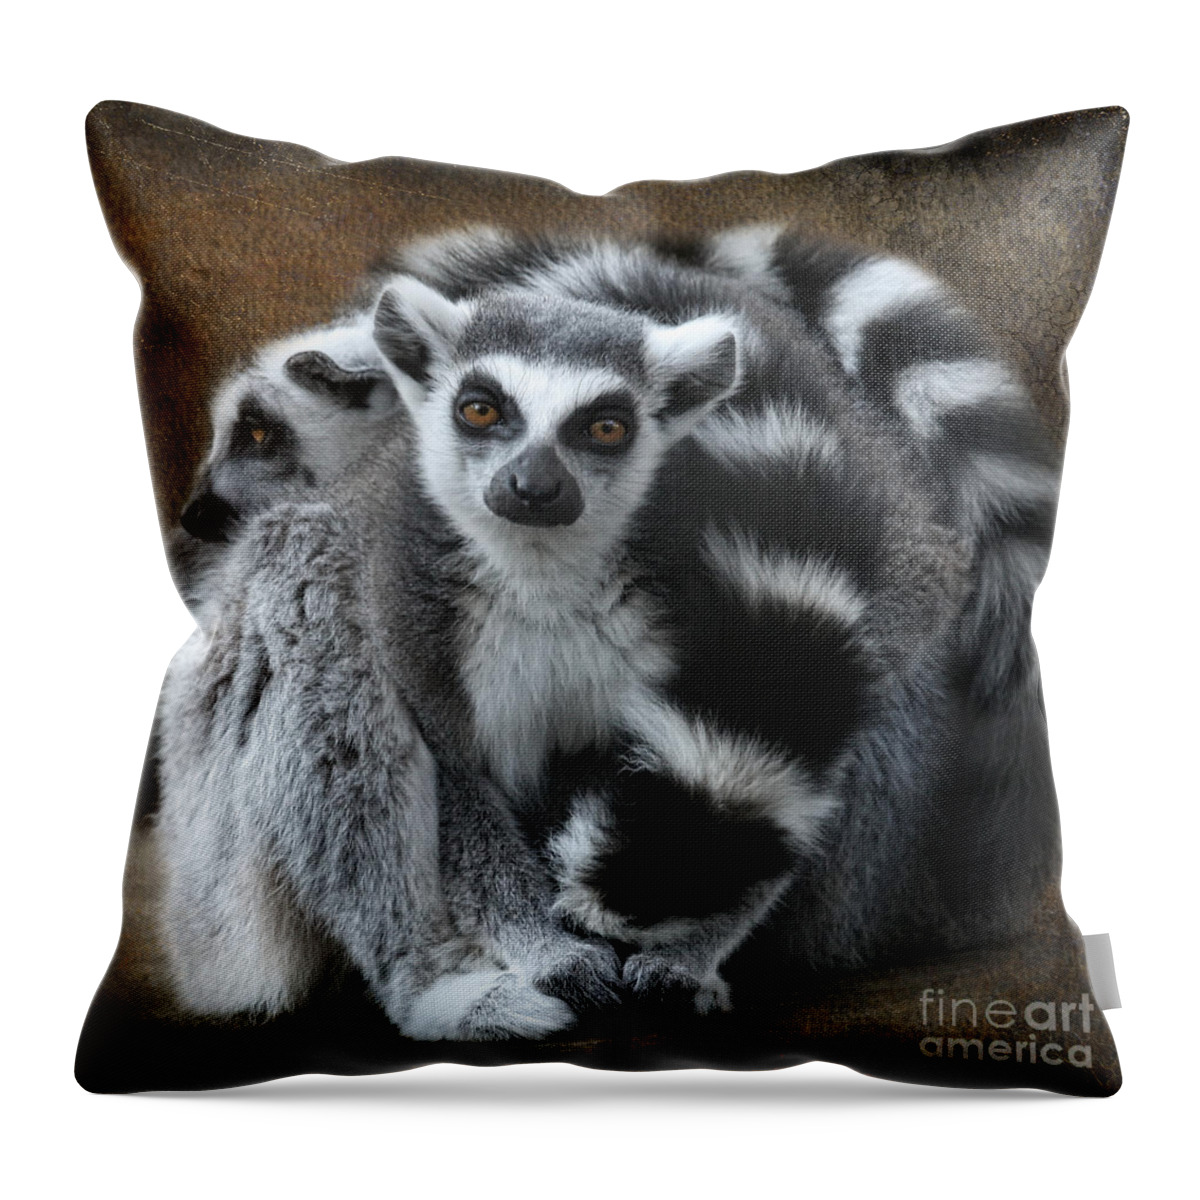 Lemur Throw Pillow featuring the digital art Curious Lemur by Jayne Carney